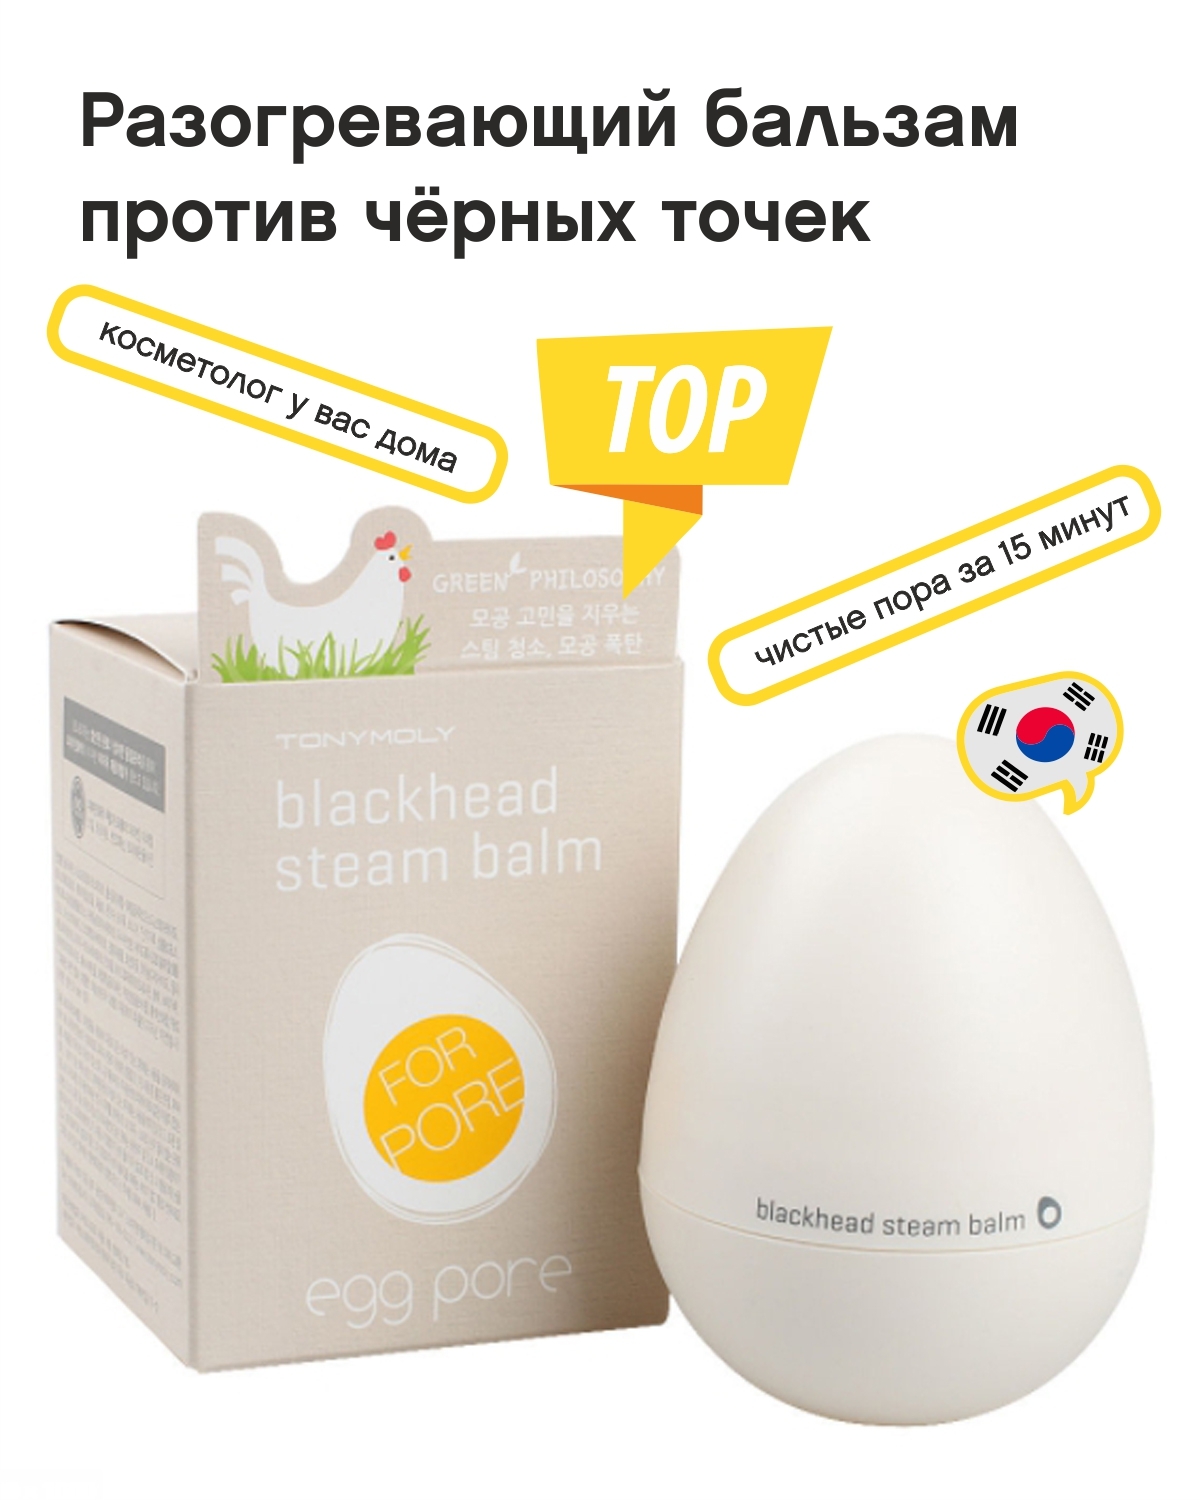 Blackhead steam balm egg pore как пользоваться фото 21